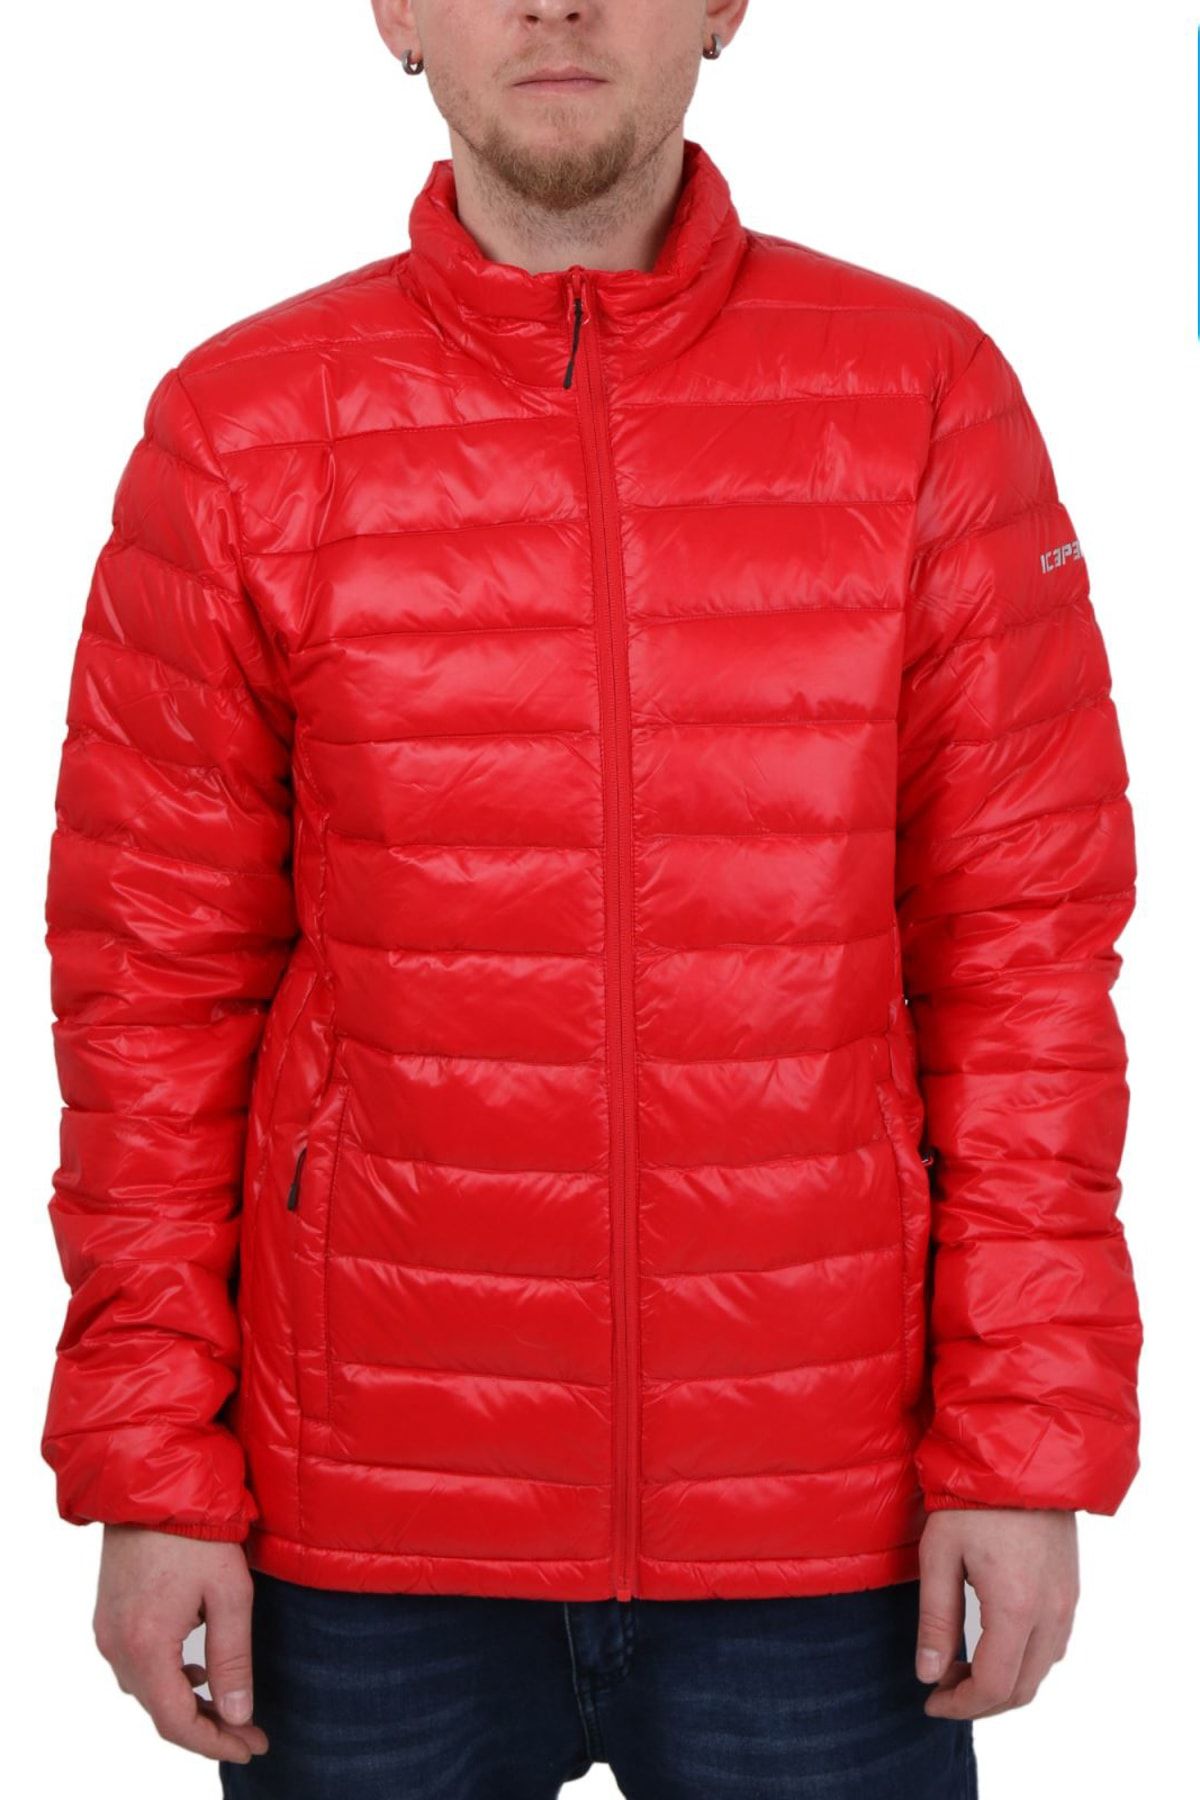 Icepeak Erkek Outdoor Montu Kırmızı Vinny Jacket 56212 815 646